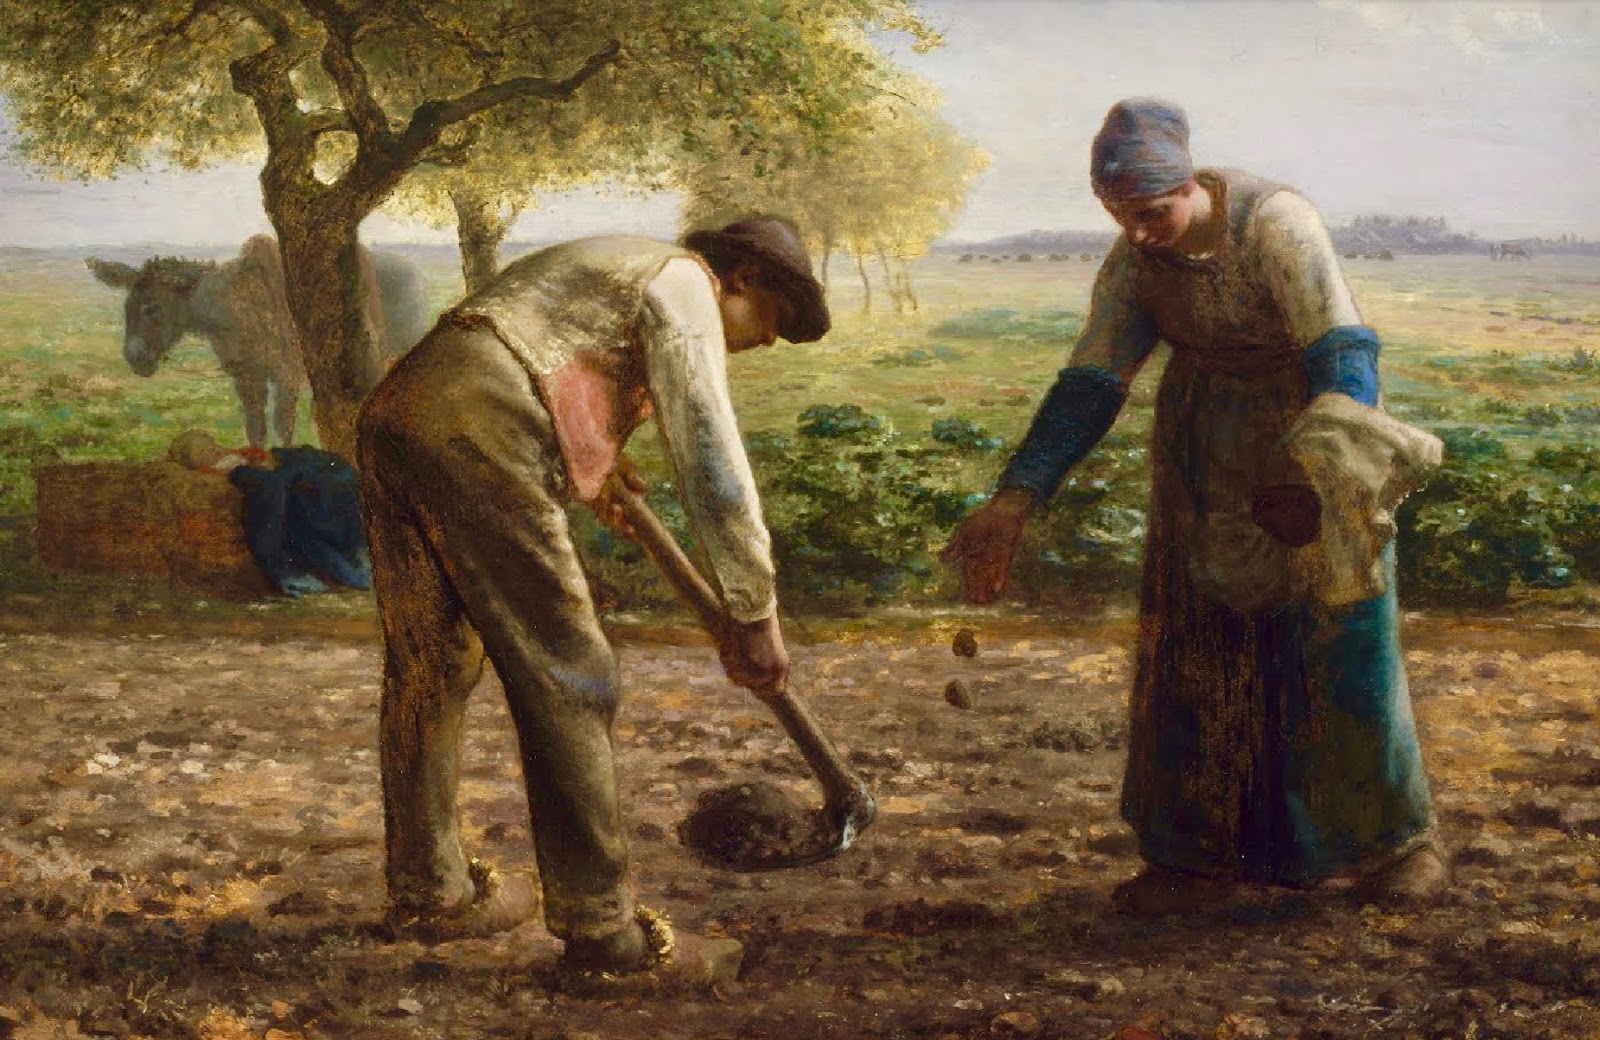 El Poder del Arte: Los sembradores de patatas,obra de Jean-François Millet